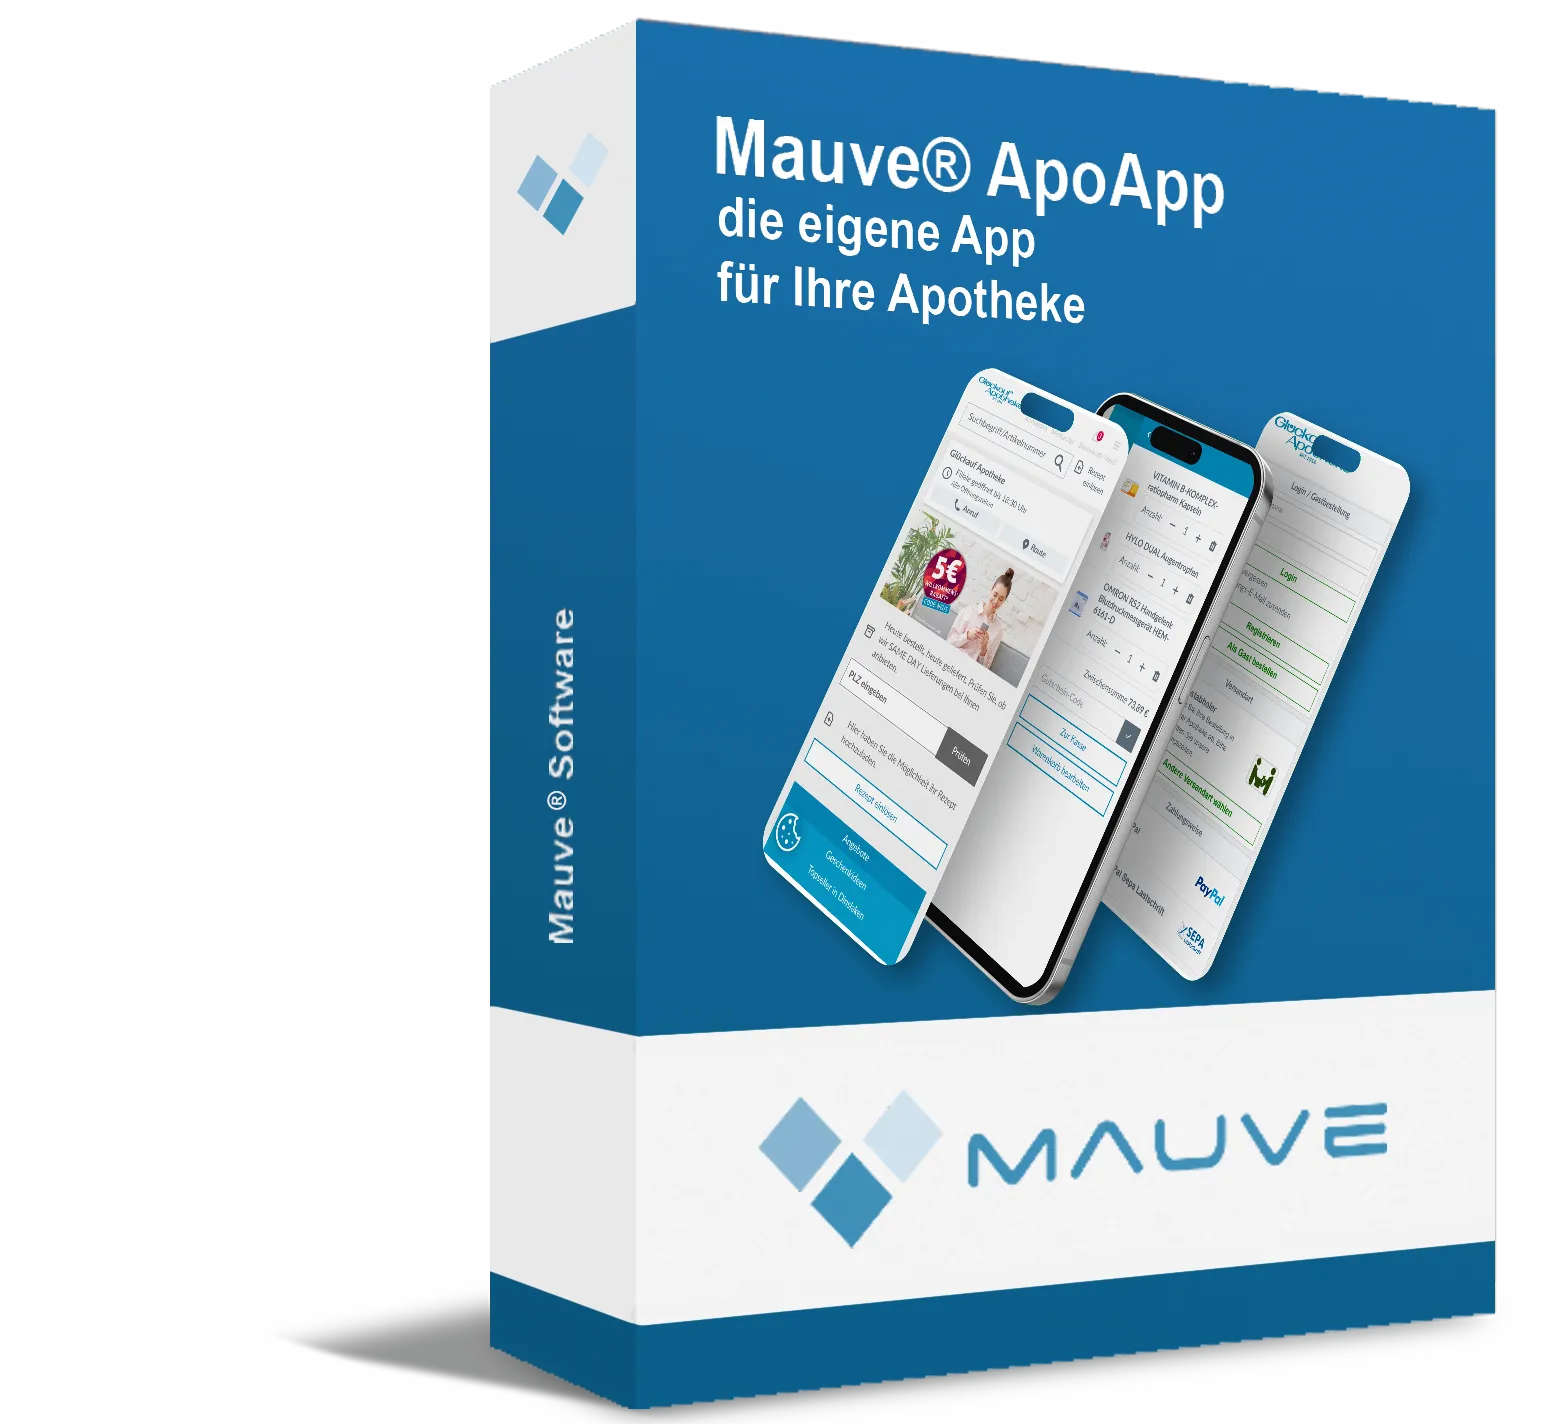 Mauve® ApoApp